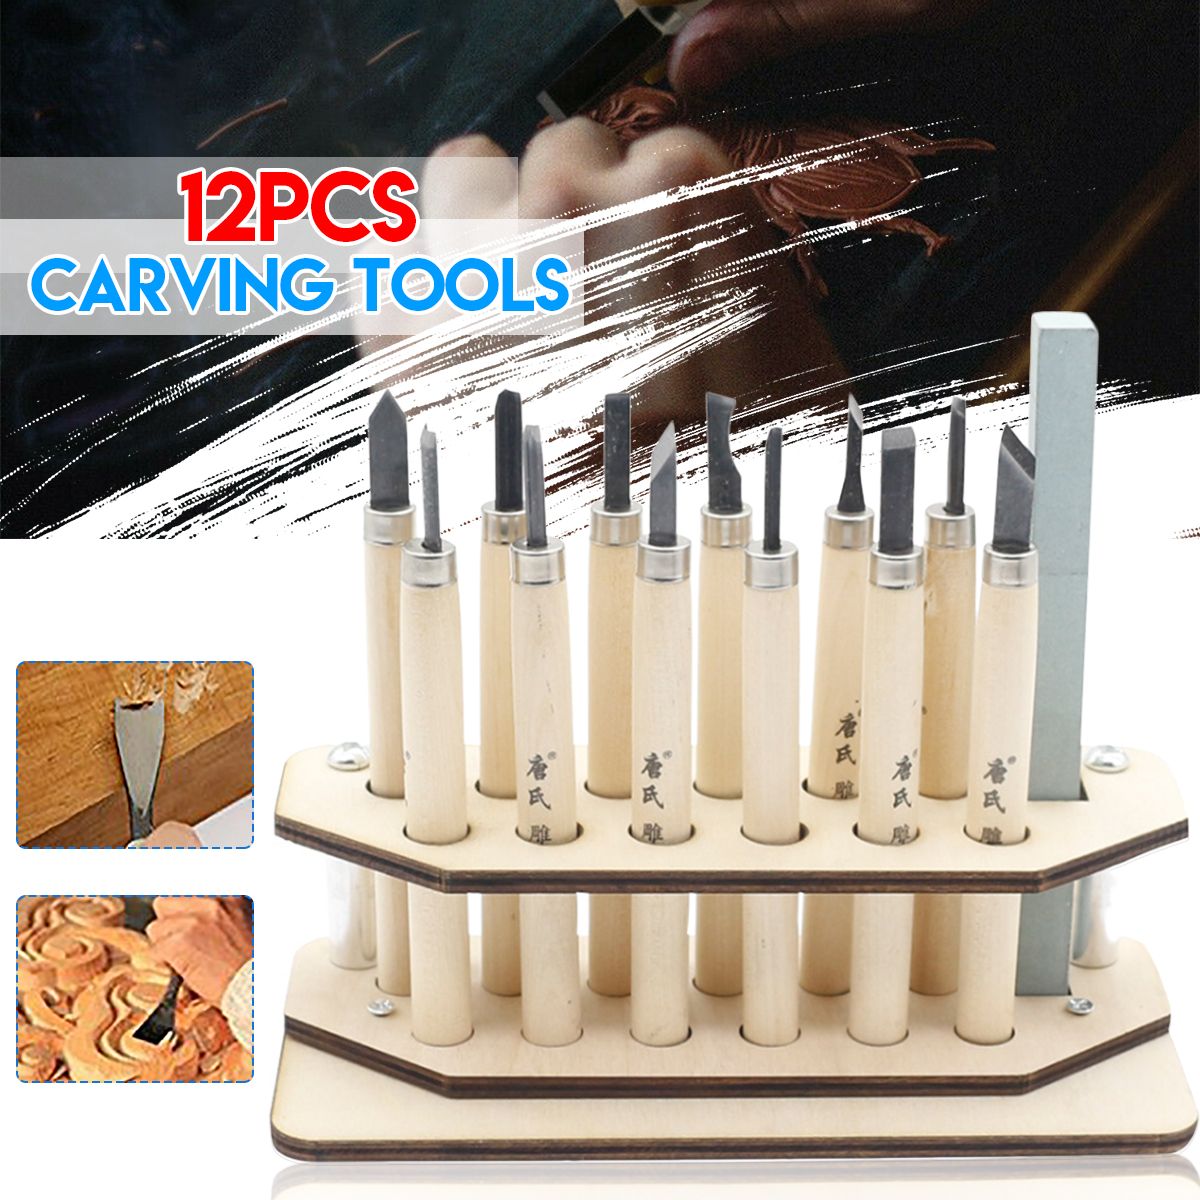 12Pcs-Wood-Carving-Tool-Set-Chisels-Cutter-Woodcut-Woodworking-Arts-Craft-Kit-1504134